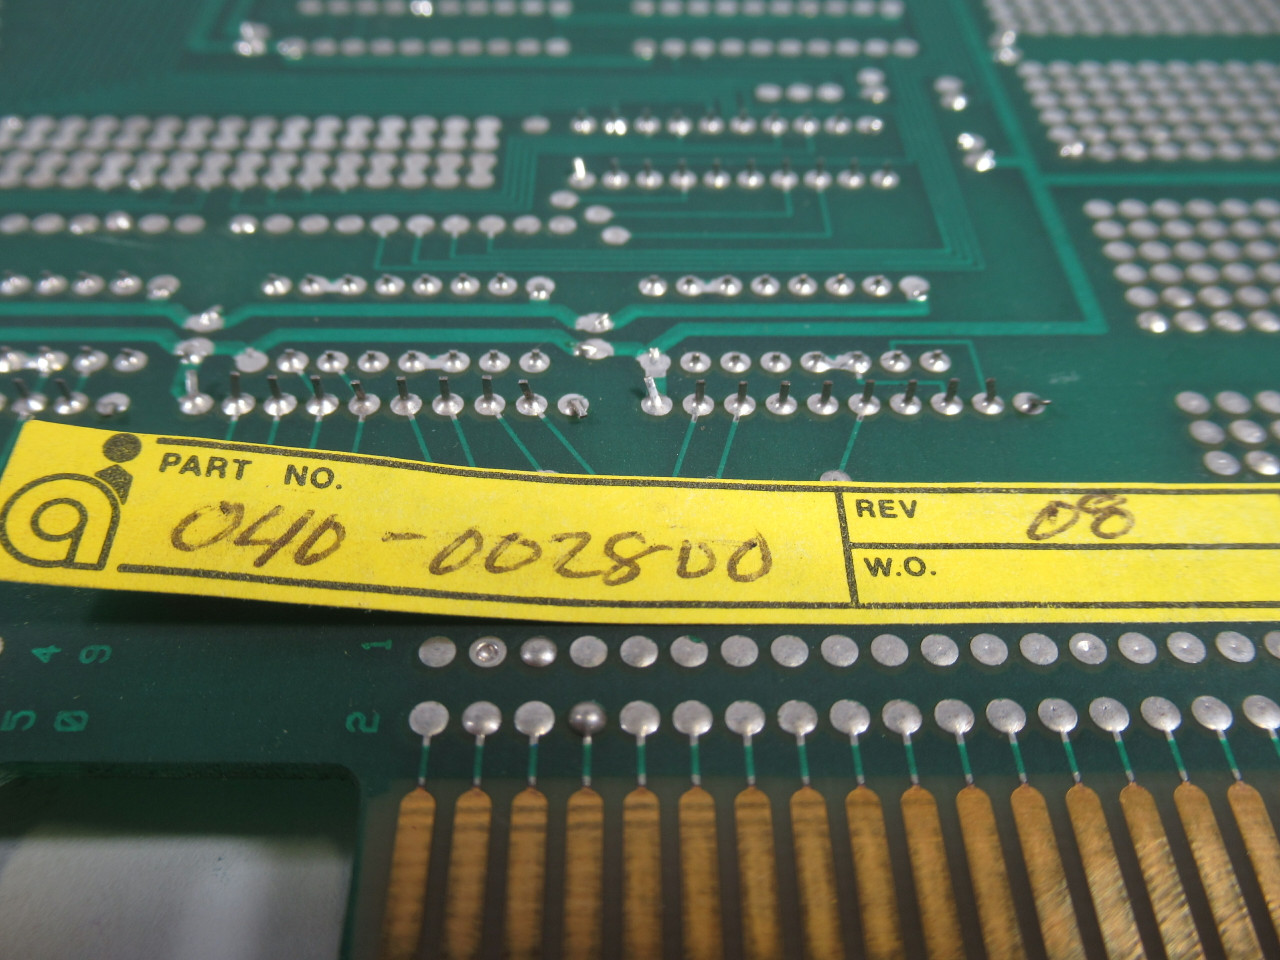 Automatix 040-002800 Rev.08 CP28 I/O Controller Board USED